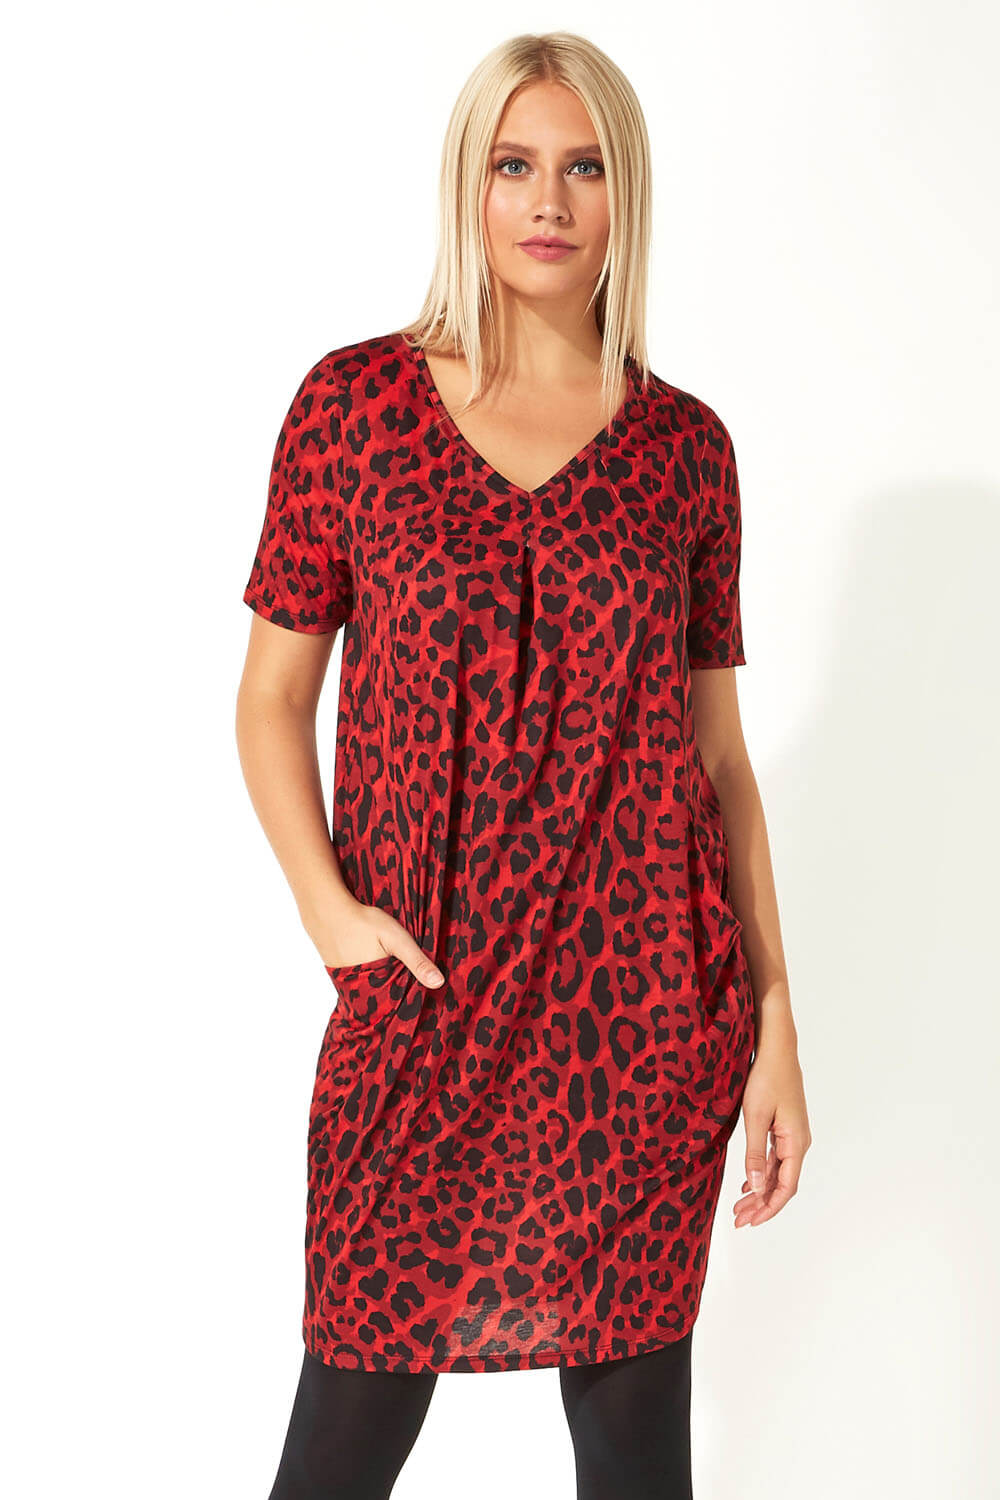 red leopard print dress uk